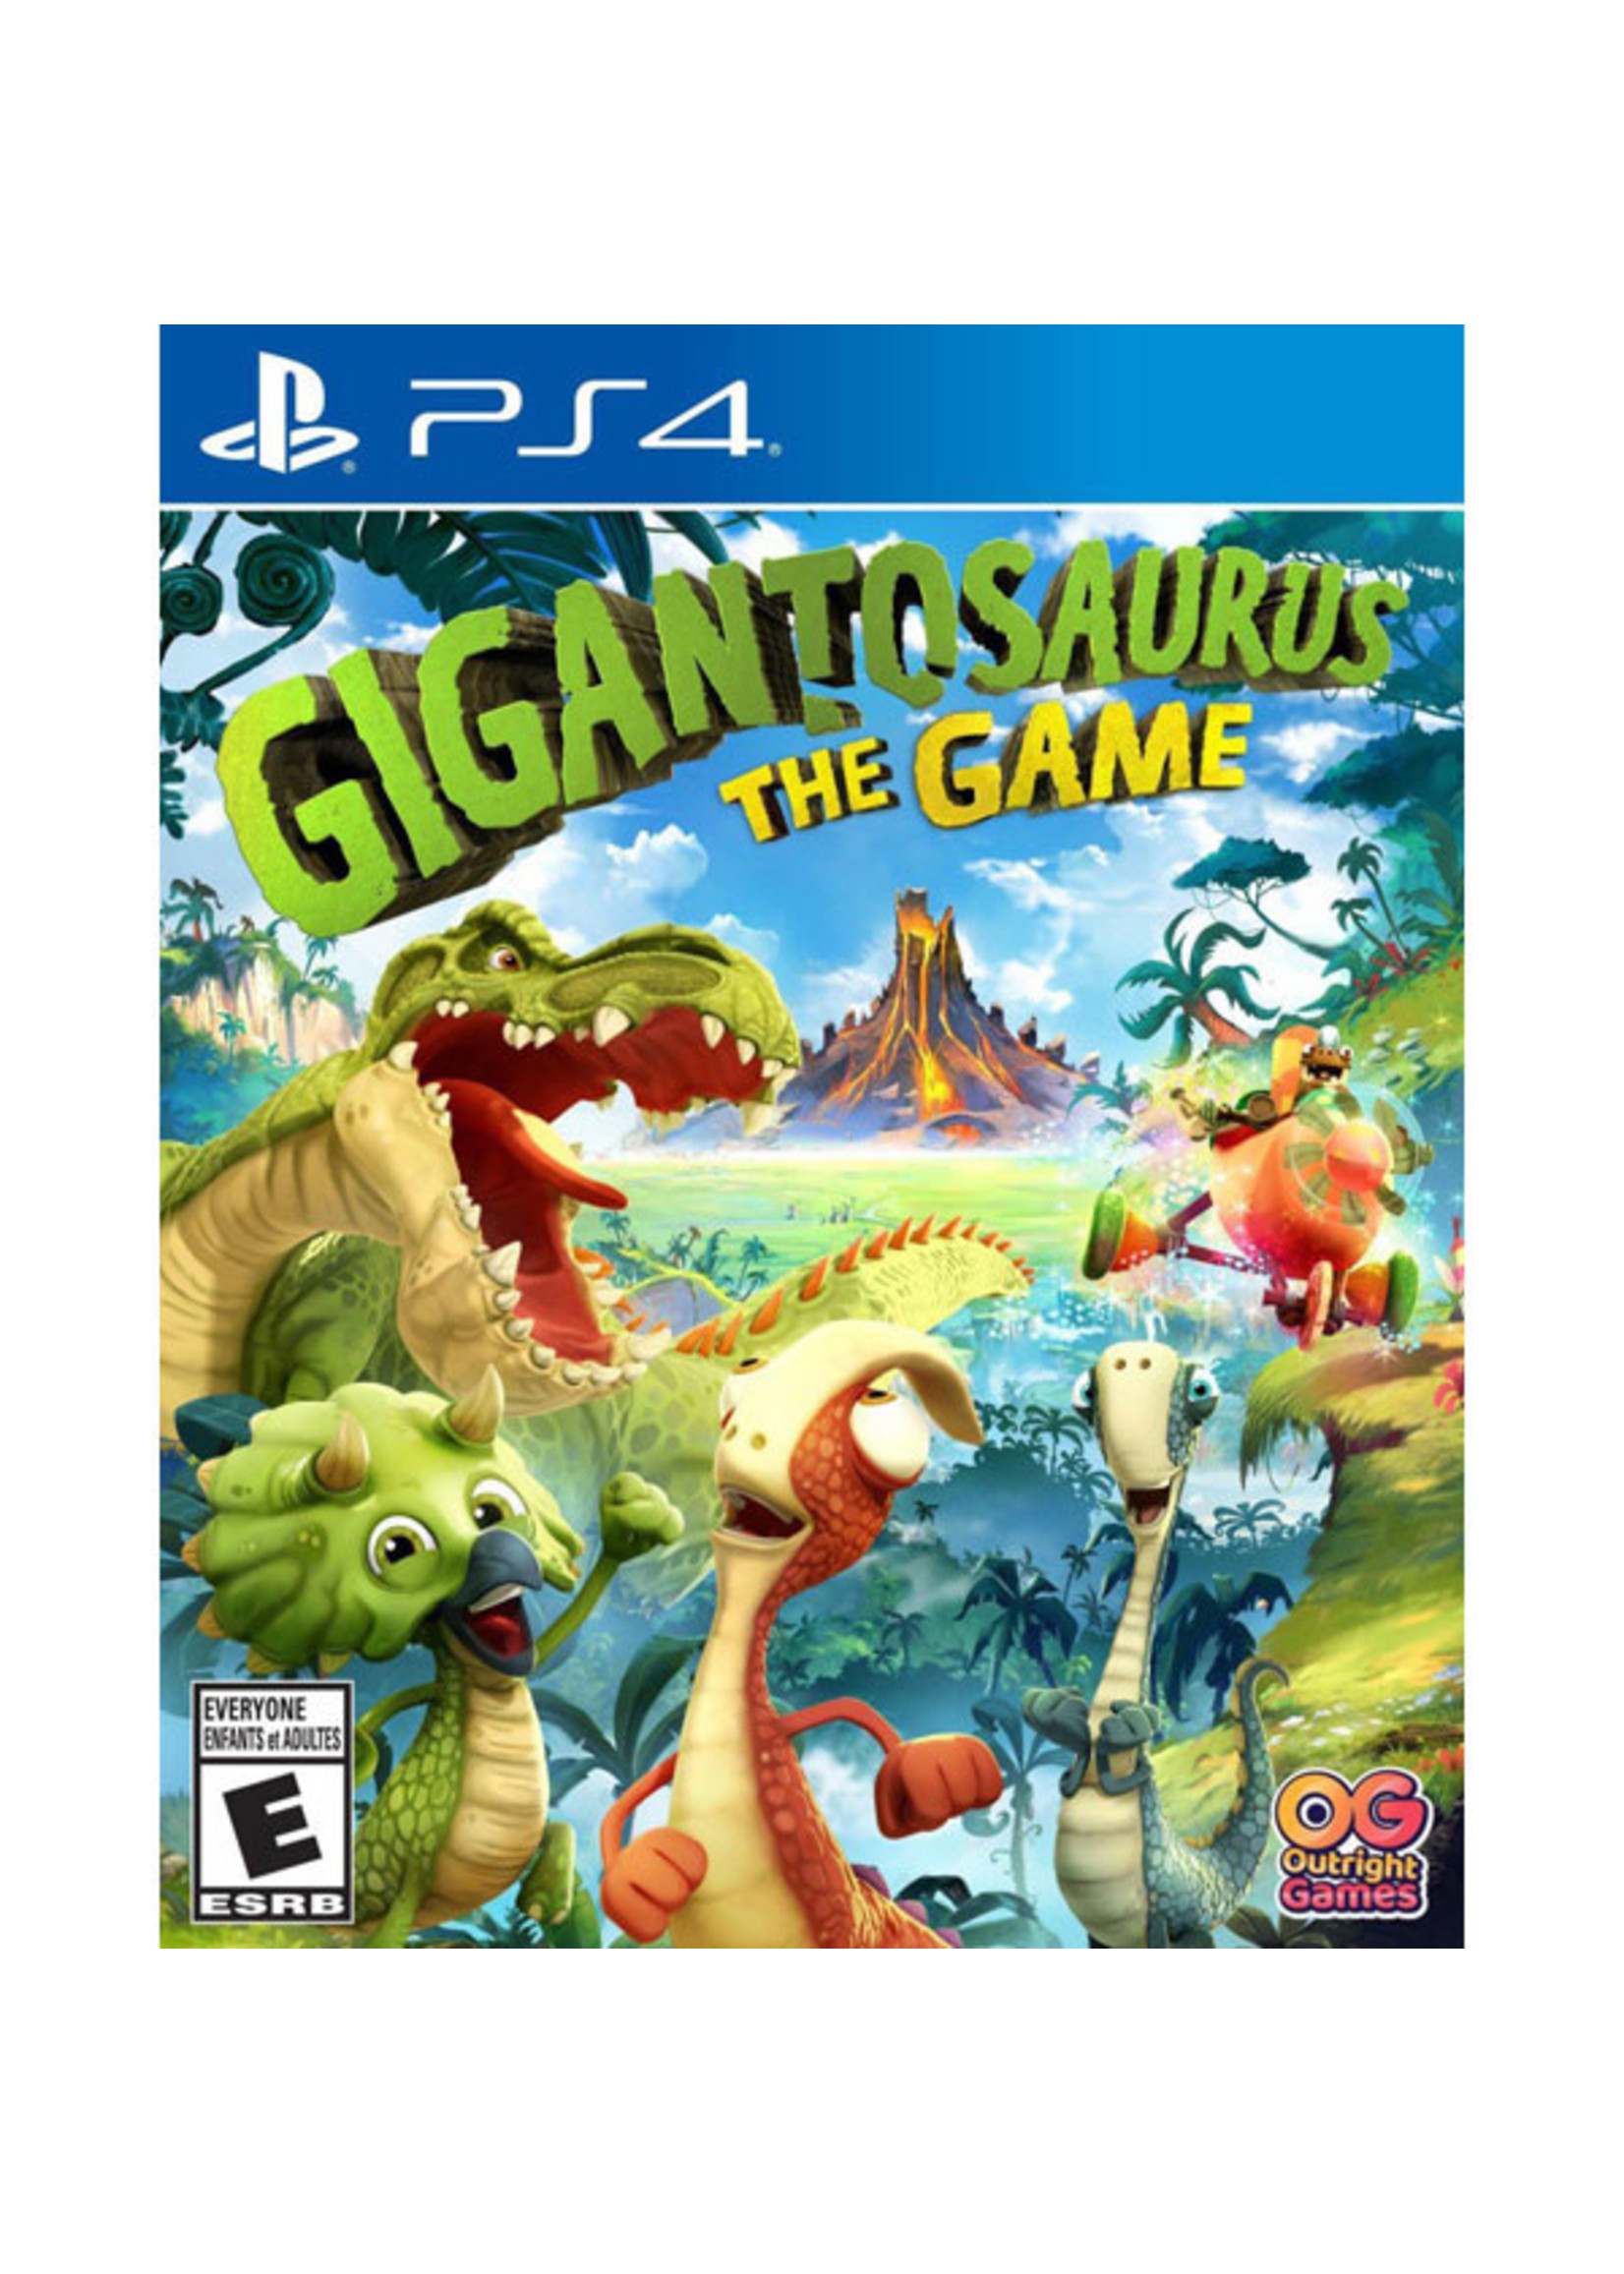 GIGANTOSAURUS THE GAME PS4